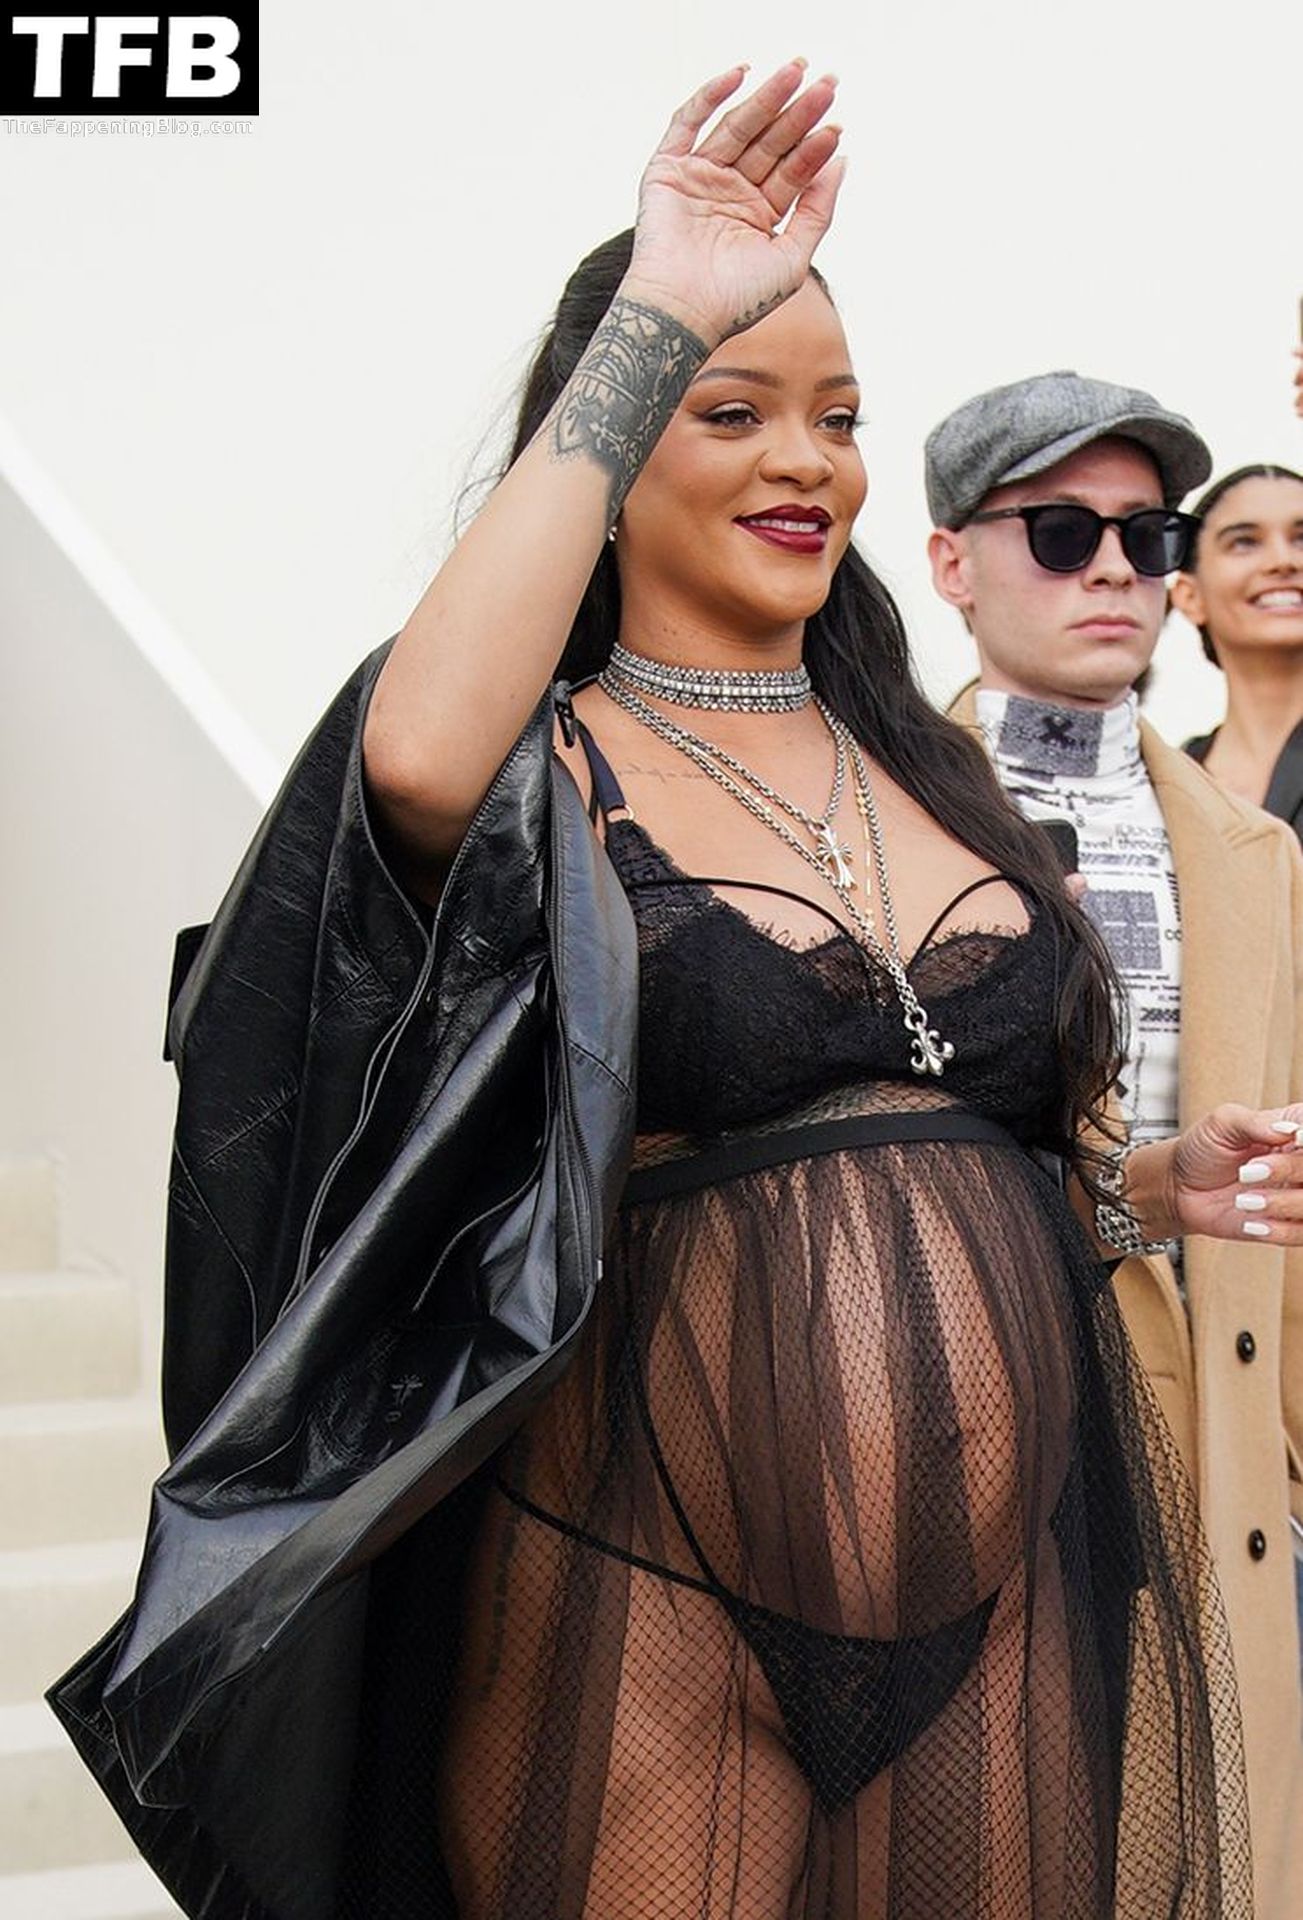 Rihanna-Sexy-The-Fappening-Blog-32-1.jpg